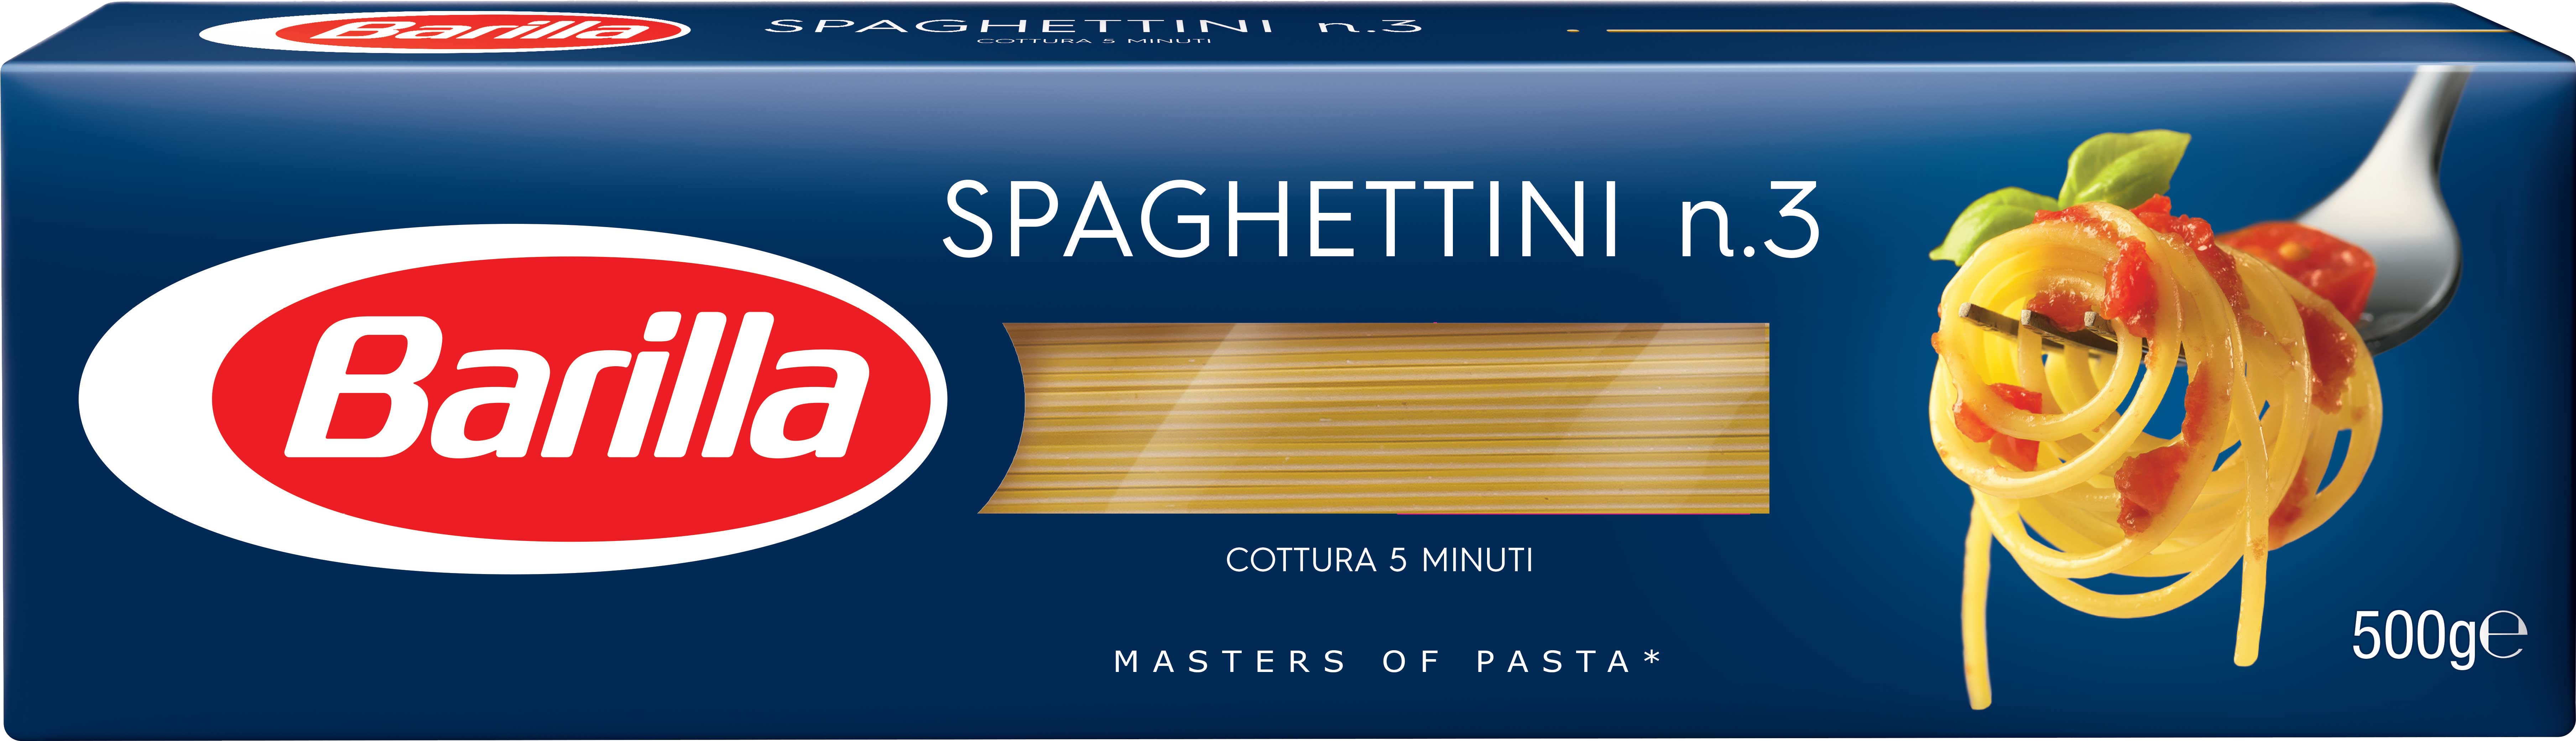 Slika za Testenina spaghettini n.3 Barilla 500g